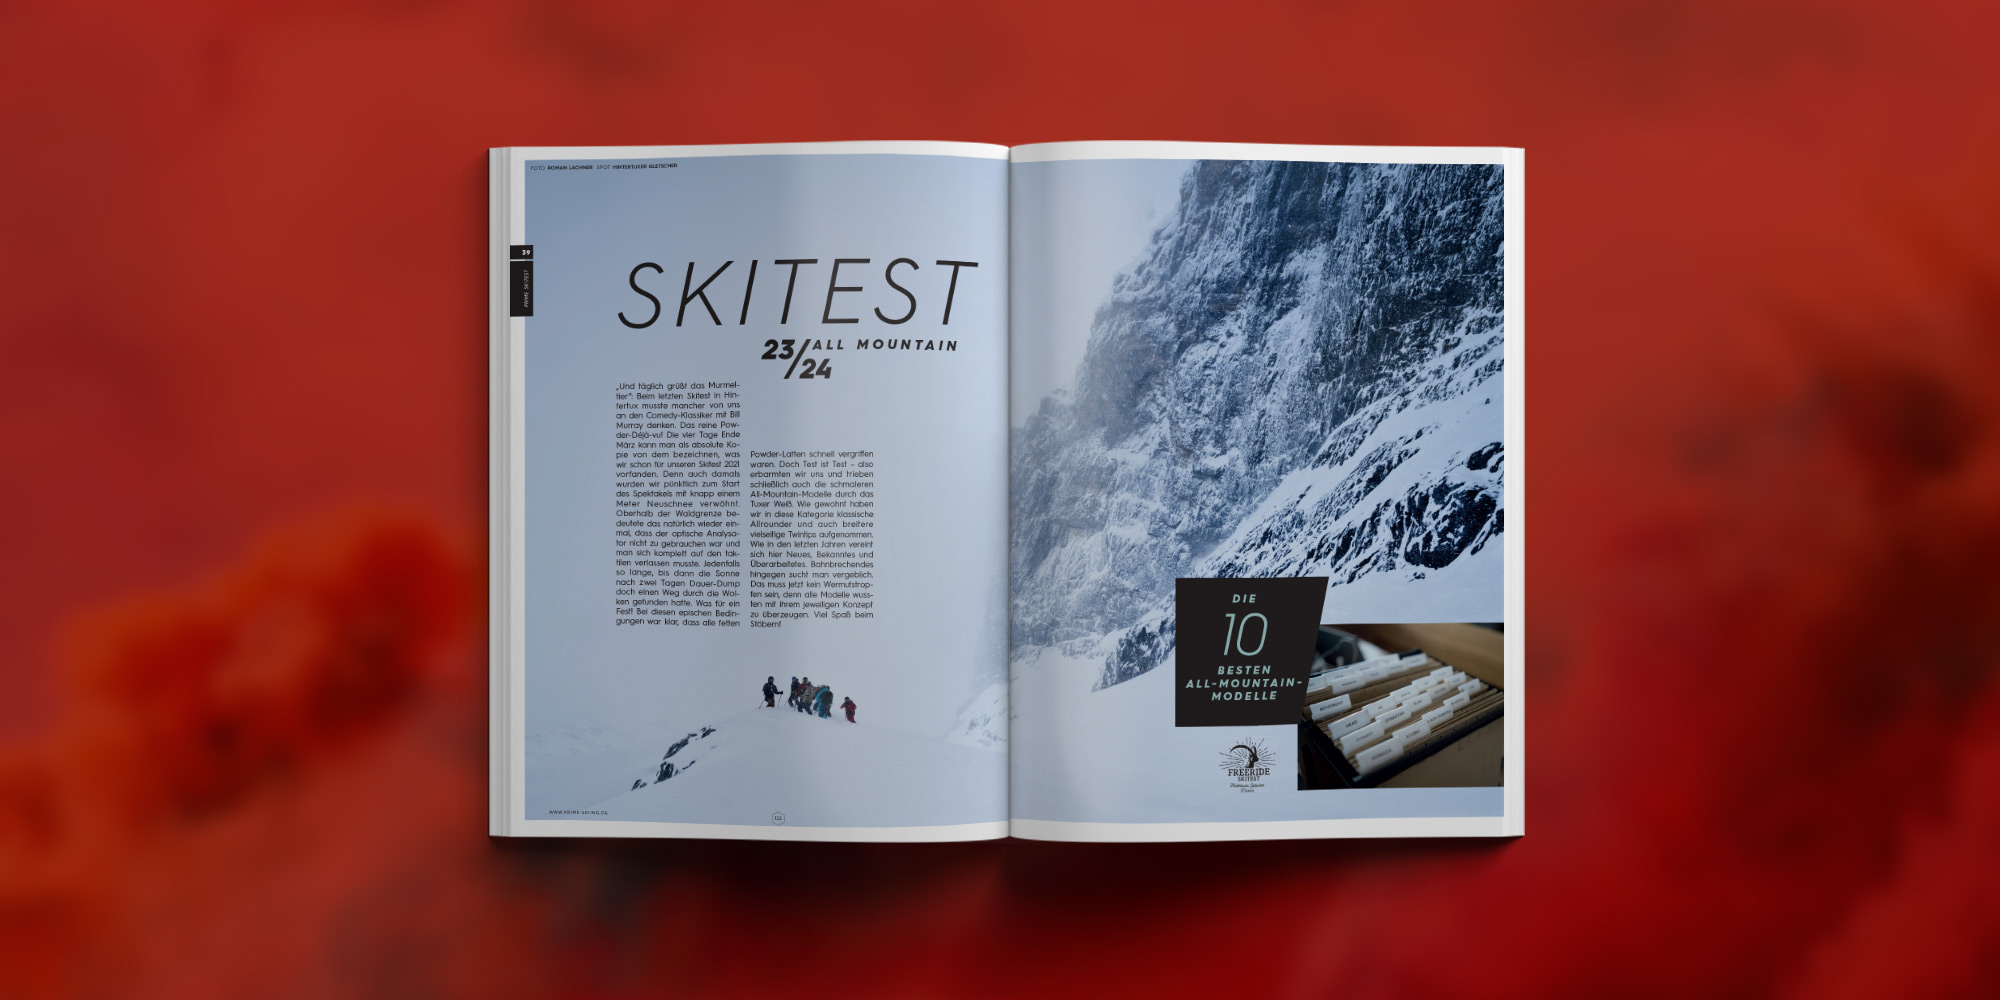 PRIME Skiing #39 Artikel Highlights: Skitest: Top 10 All-Mountain Ski